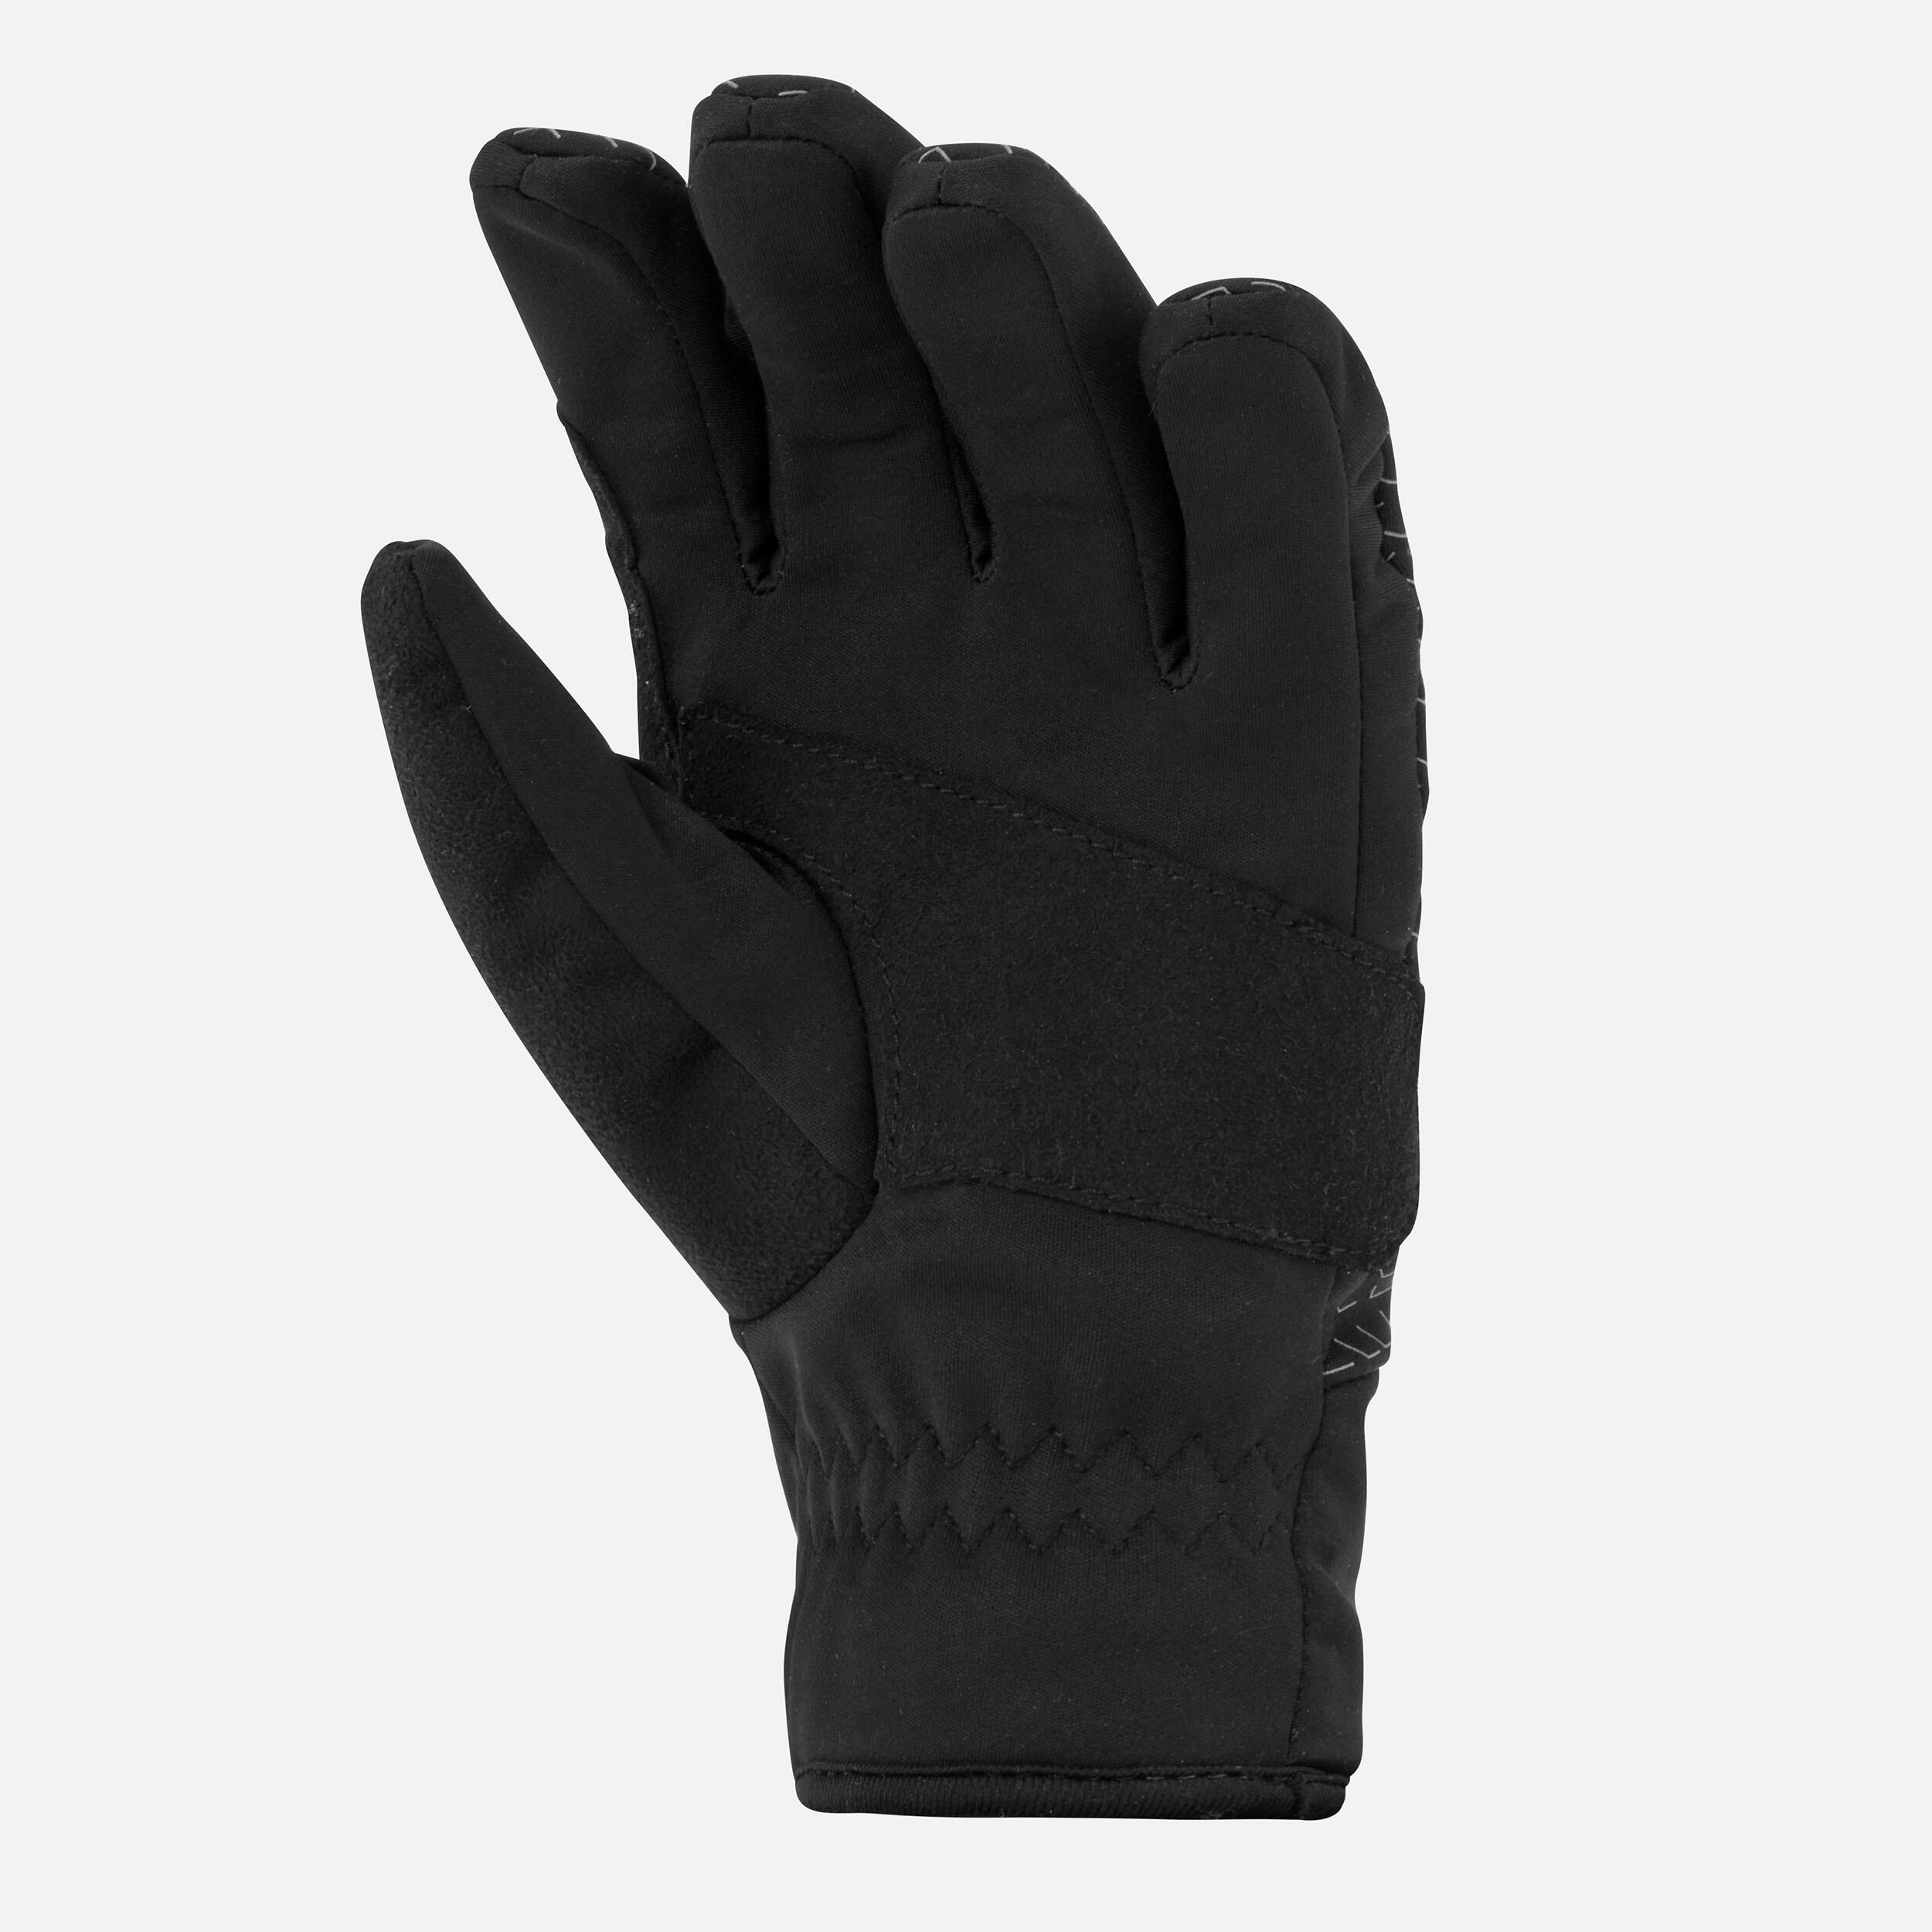 Kids' Cross-Country Ski Warm Gloves XC S 100 - Black 4/7